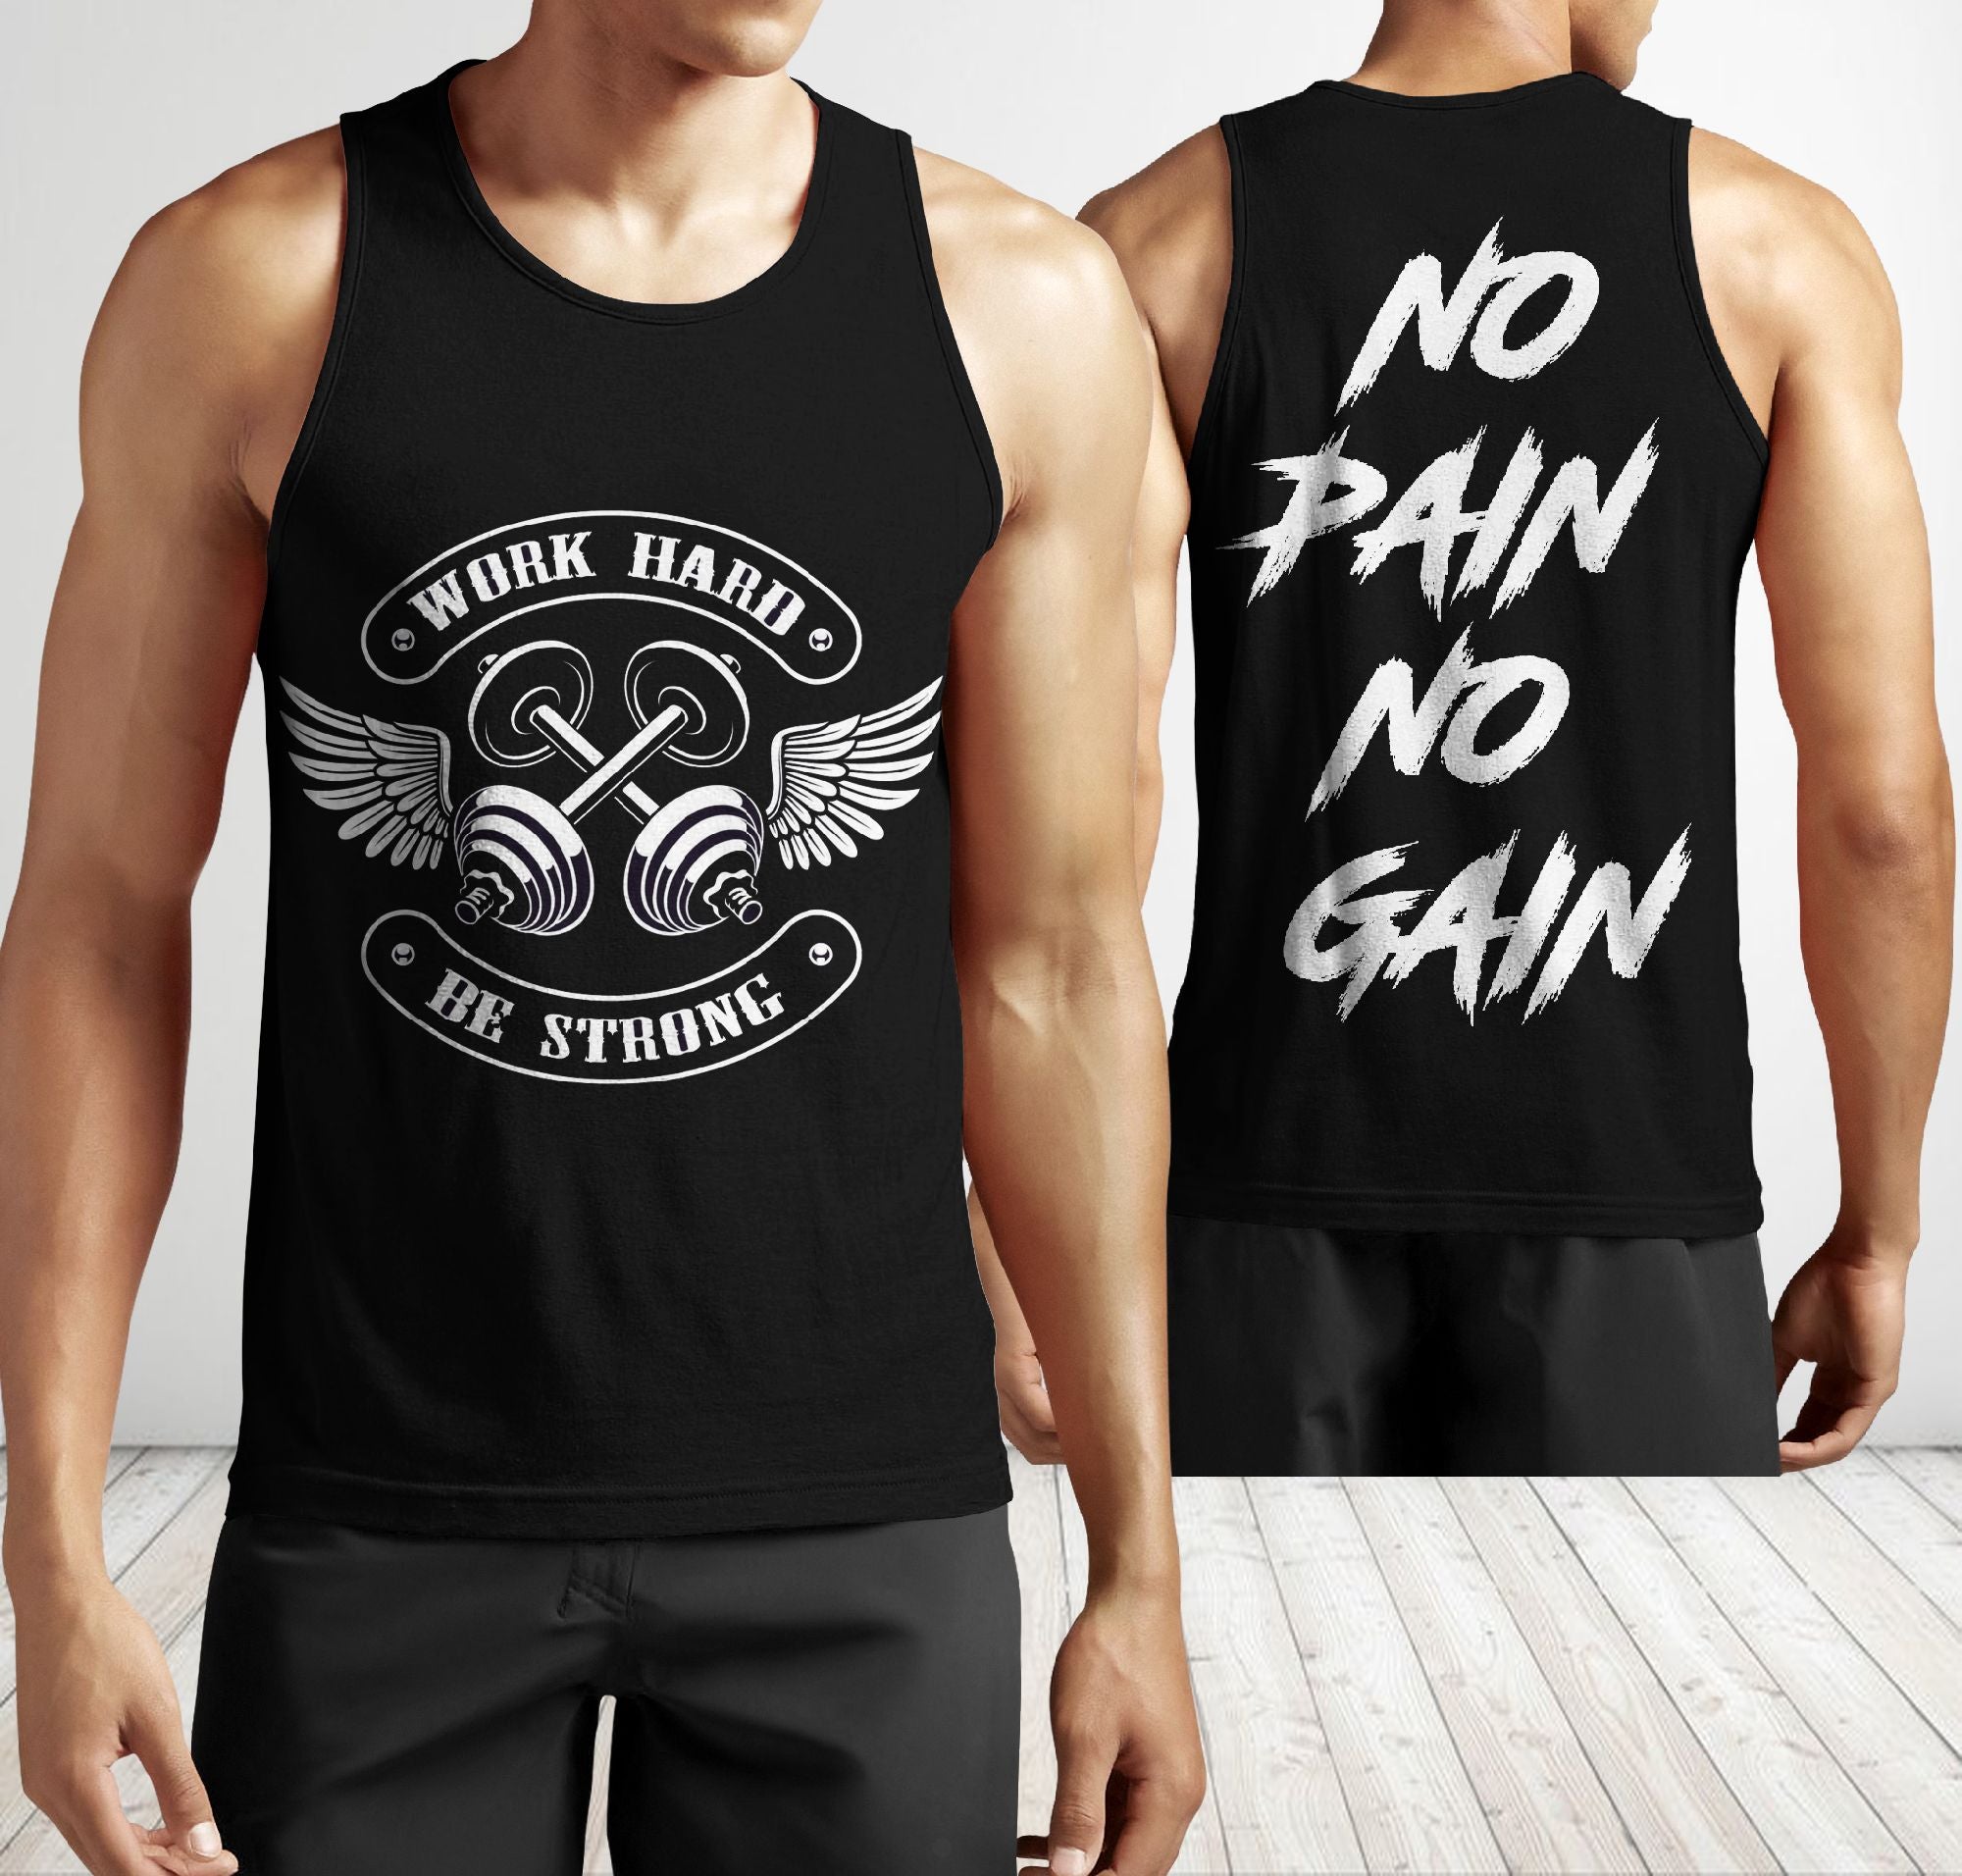 Men Gym Tank Tops Motivational ShirtsWork Hard Be